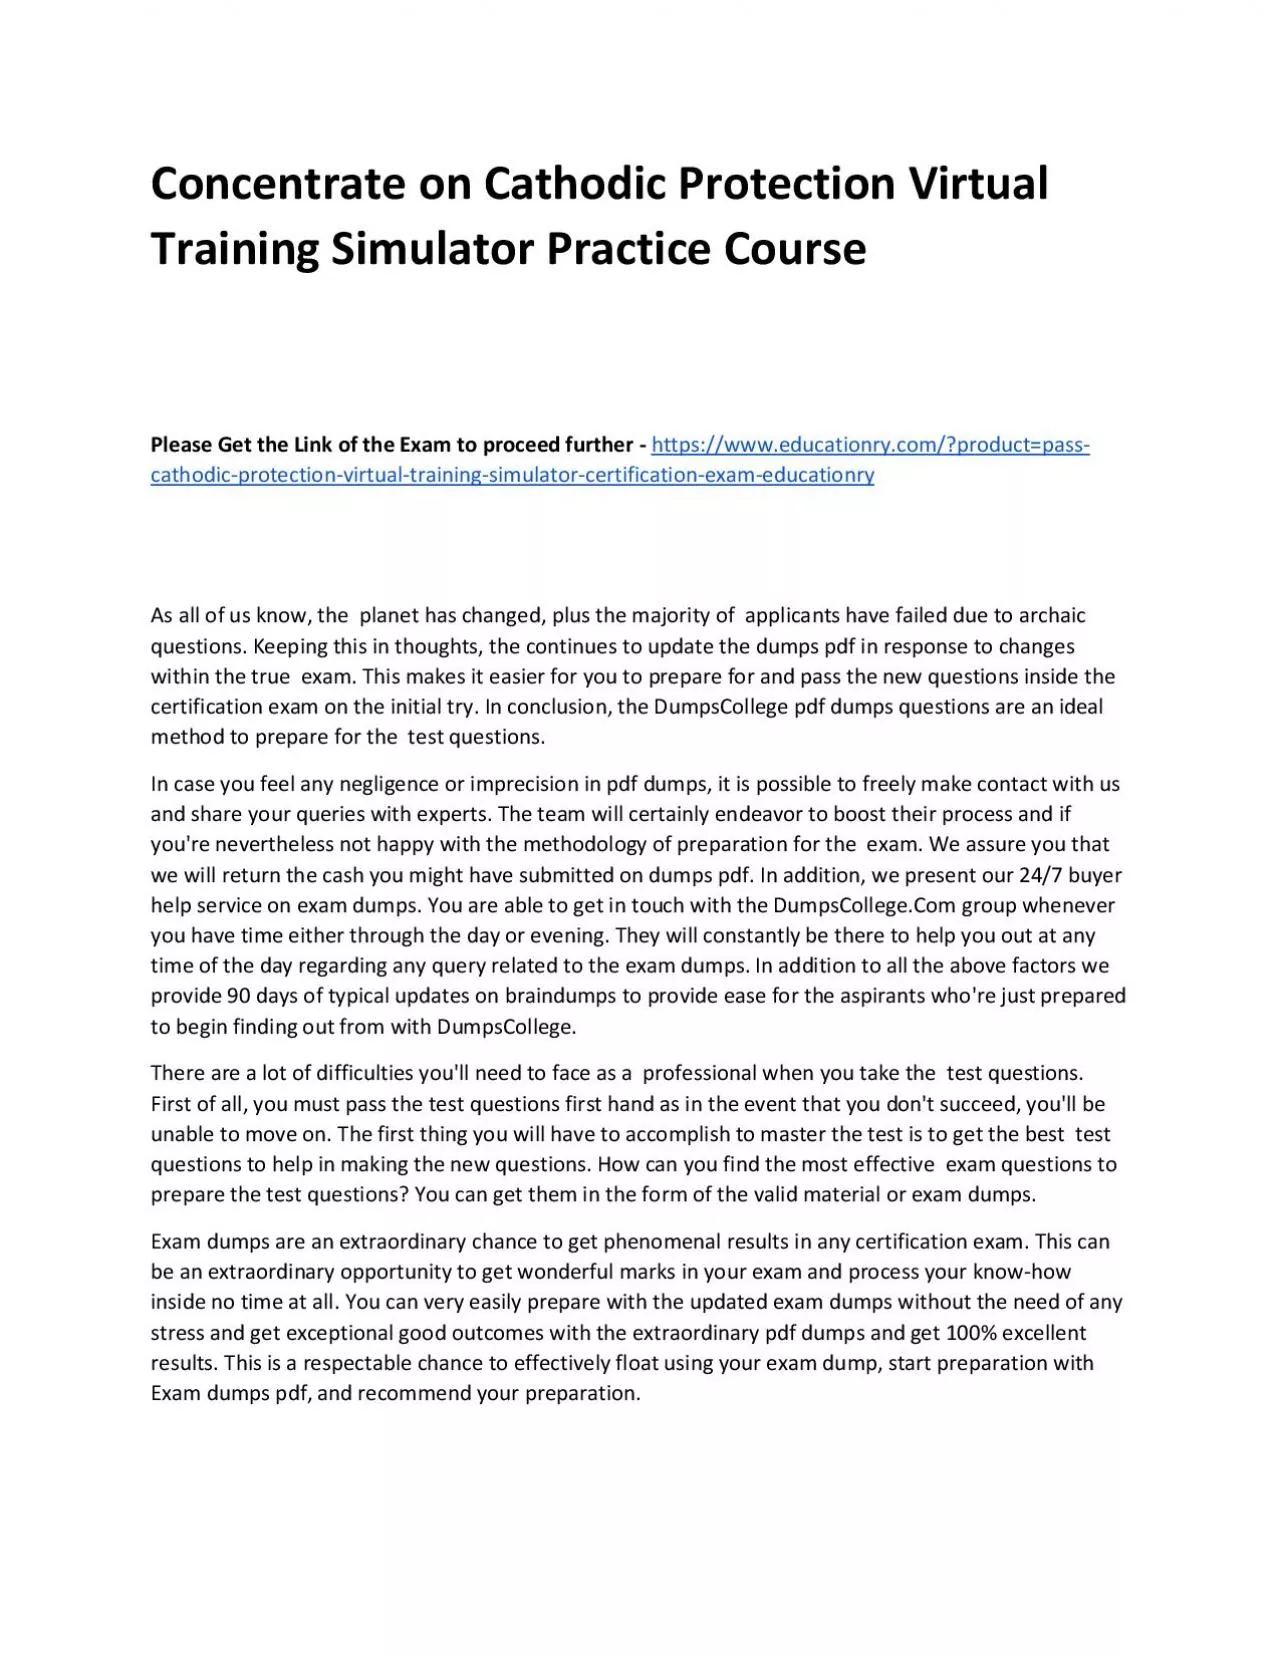 Cathodic Protection Virtual Training Simulator